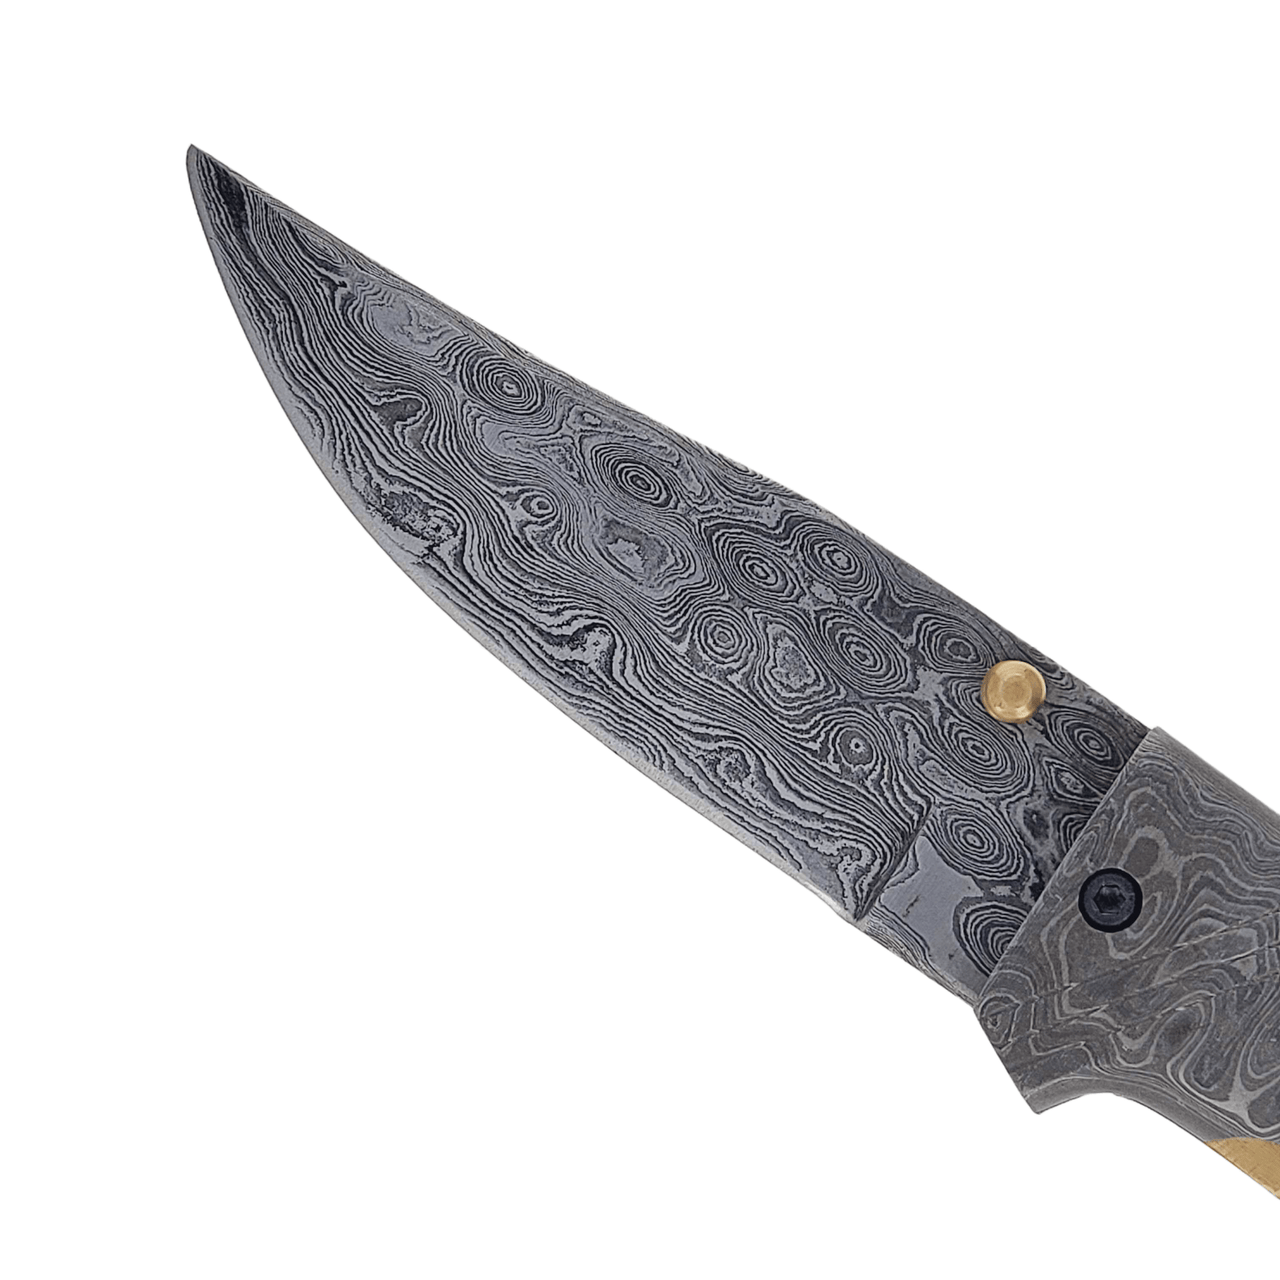 Walnut+Olive Checkered Raindrop Damascus Classic Folding Blade with Belt Sheath